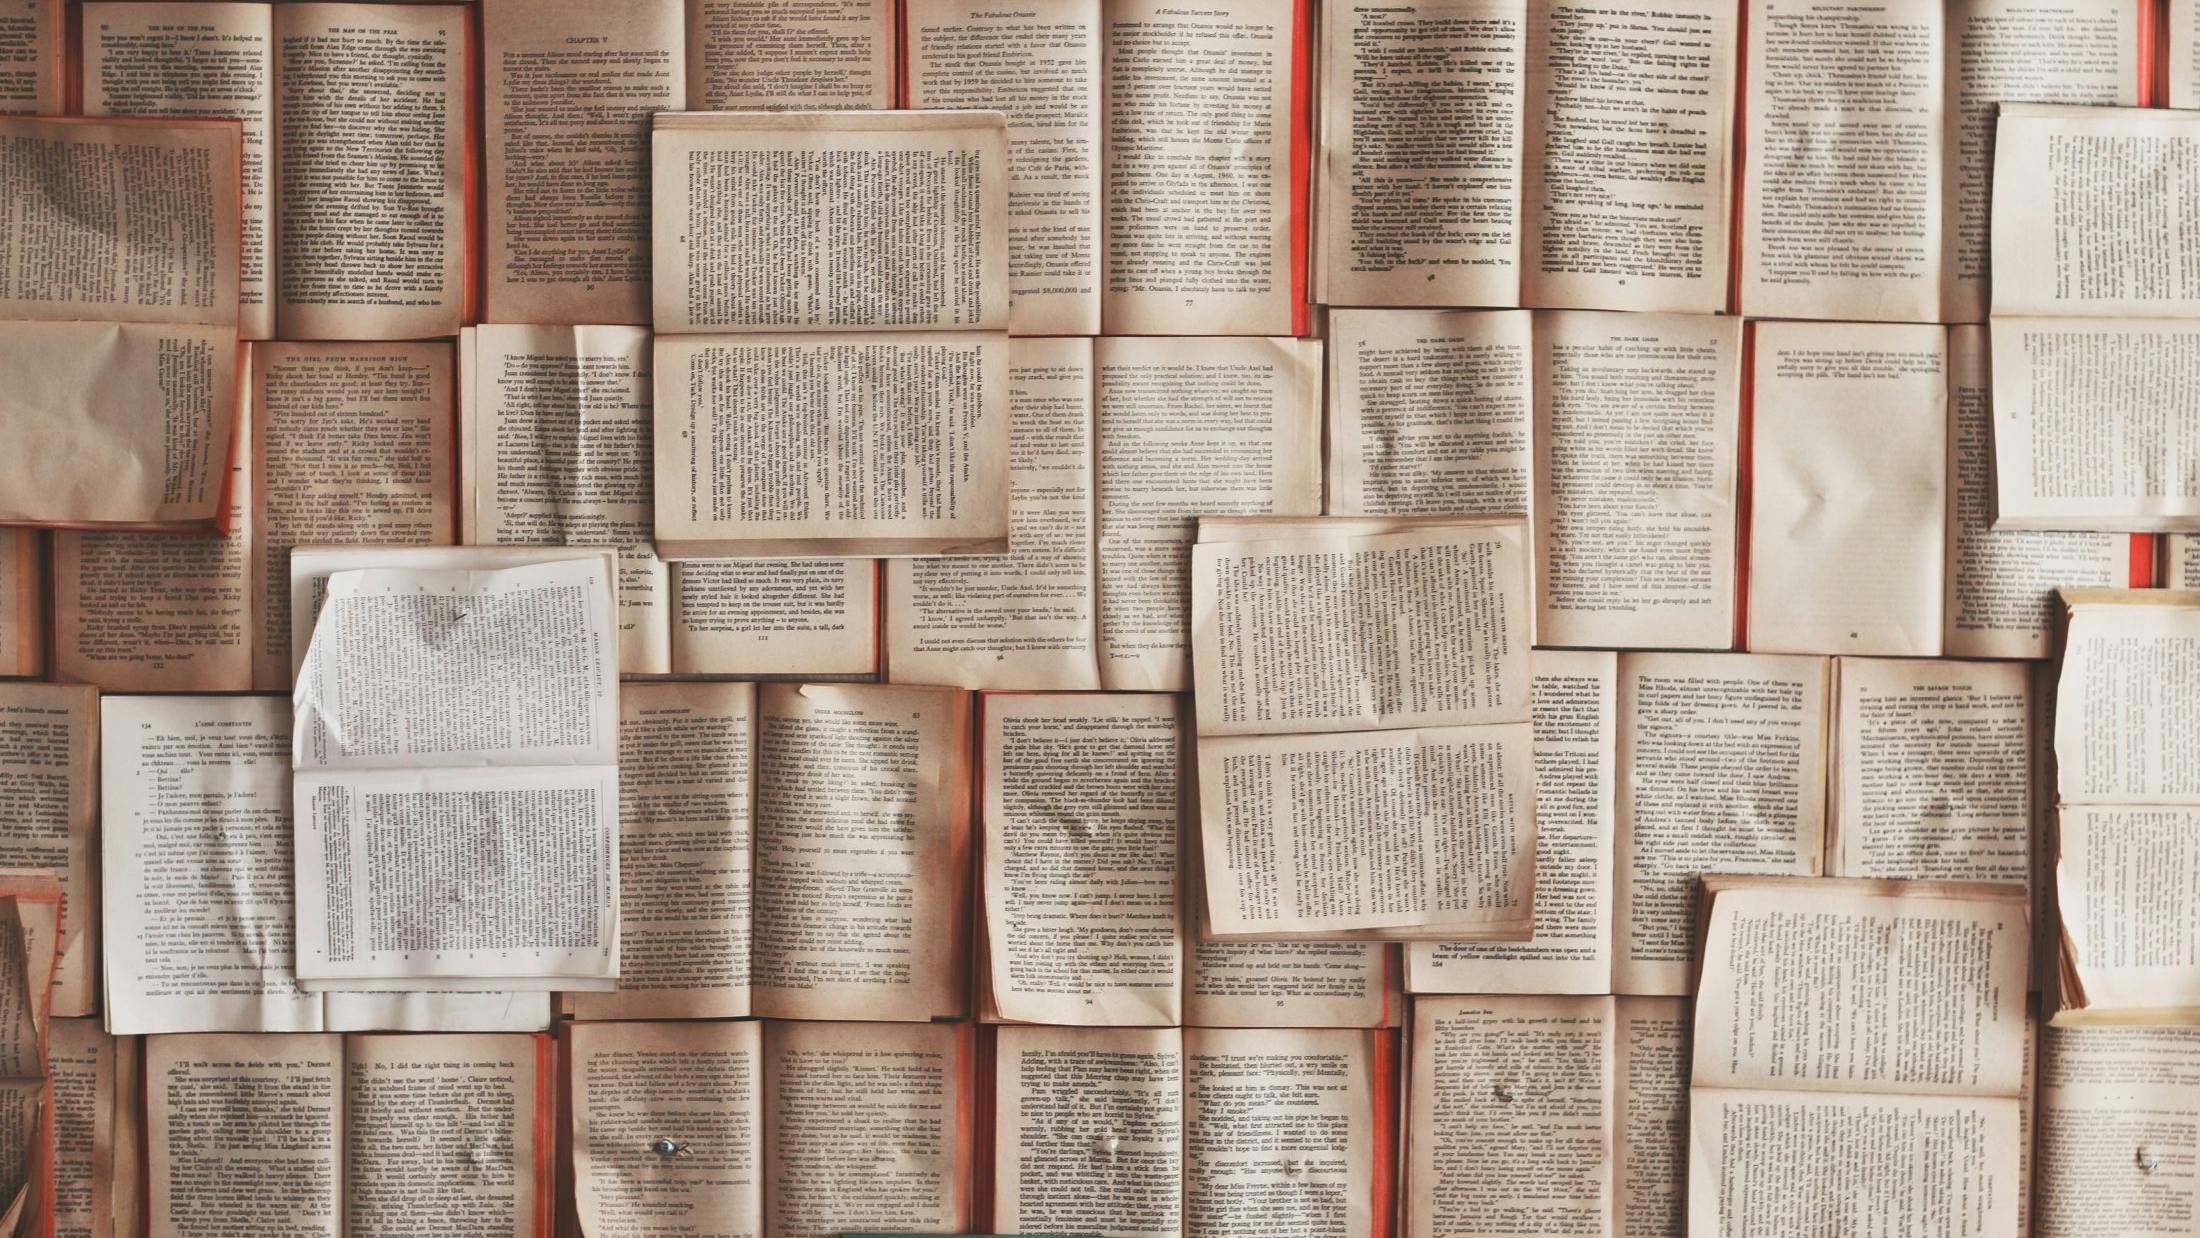 Foto di tanti libri aperti a formare una sorta di muro